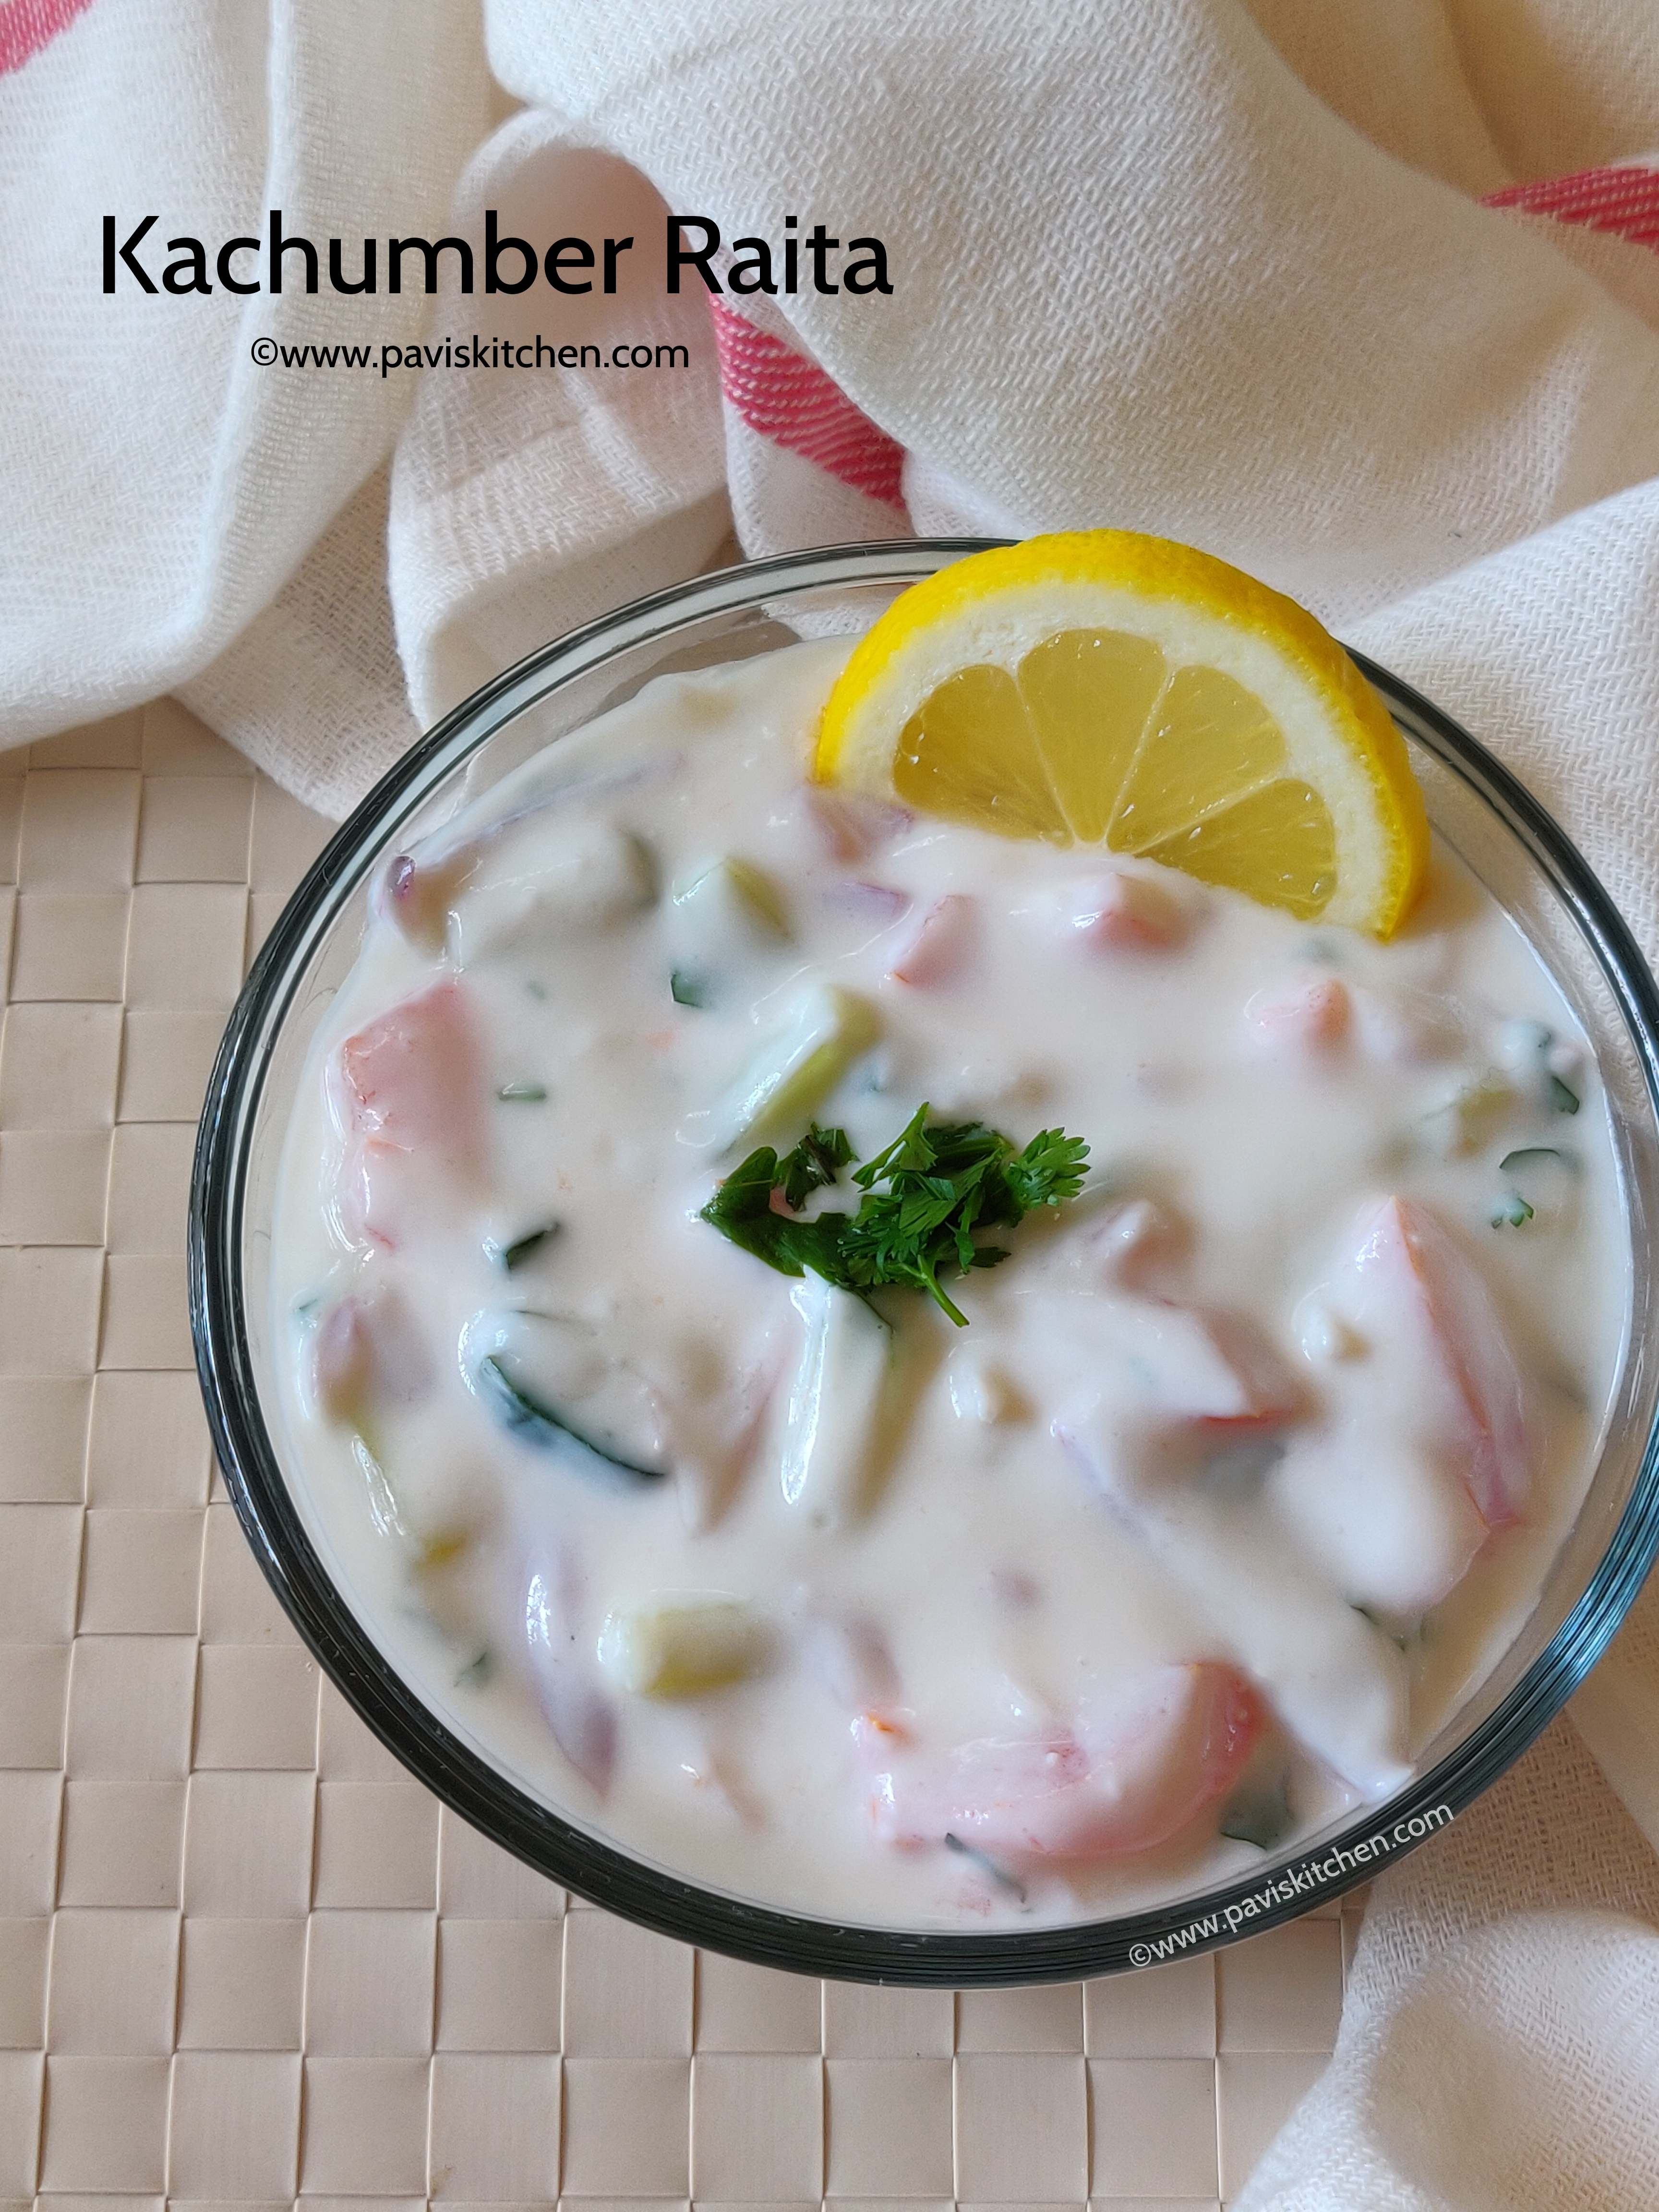 Kachumber raita recipe | Kachumber salad raita | Kachumber with yogurt